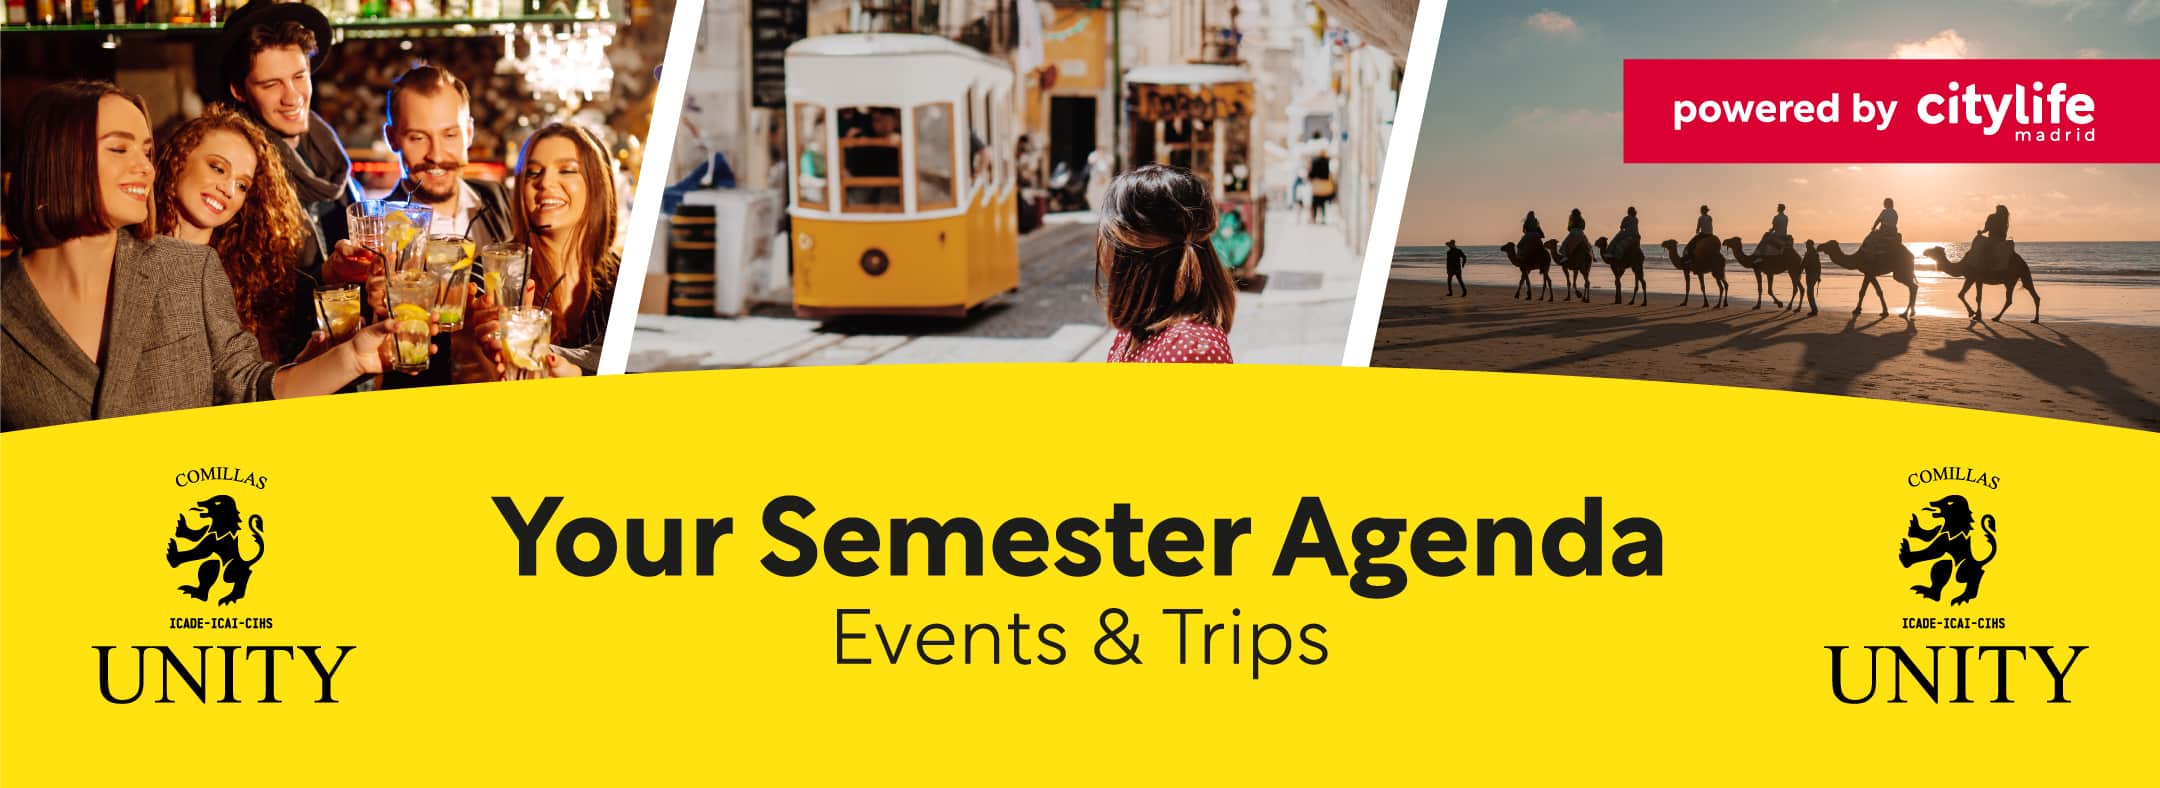 unity-semester-agenda-events-trips